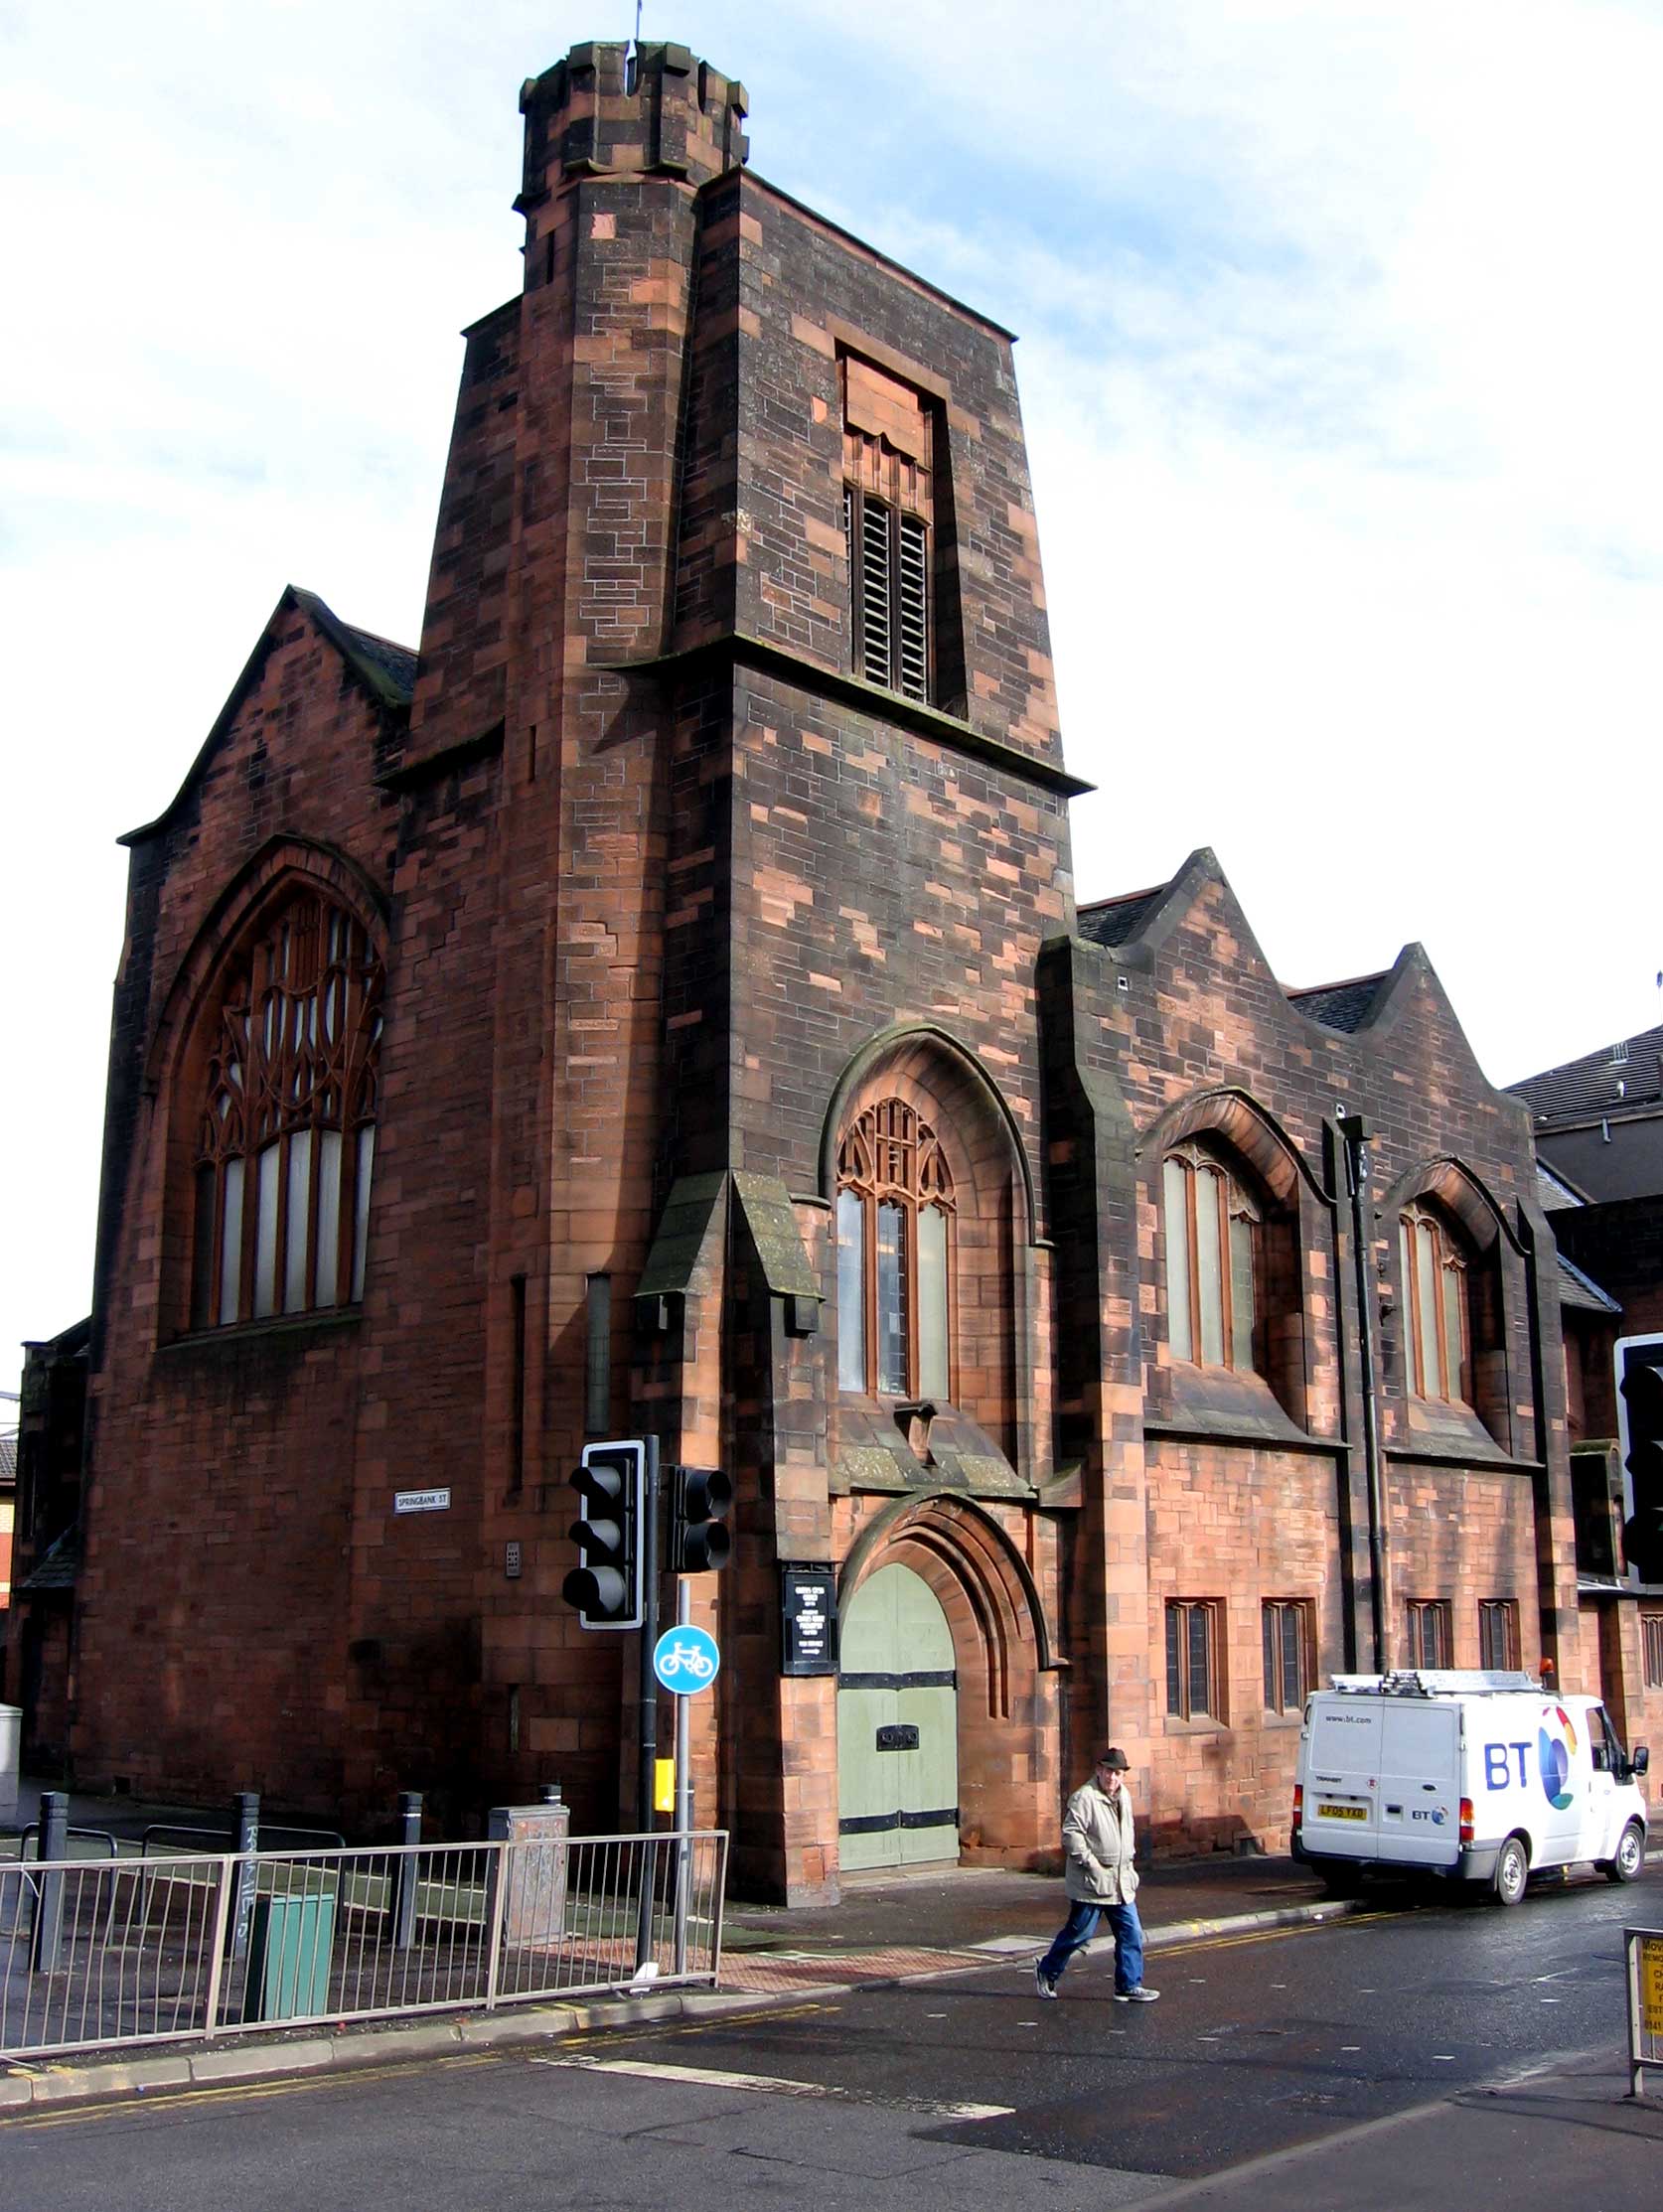 Queen's Cross Church, Glasgow designed by Charles Rennie Mackintosh. Photo: User:Dave souza, 2006